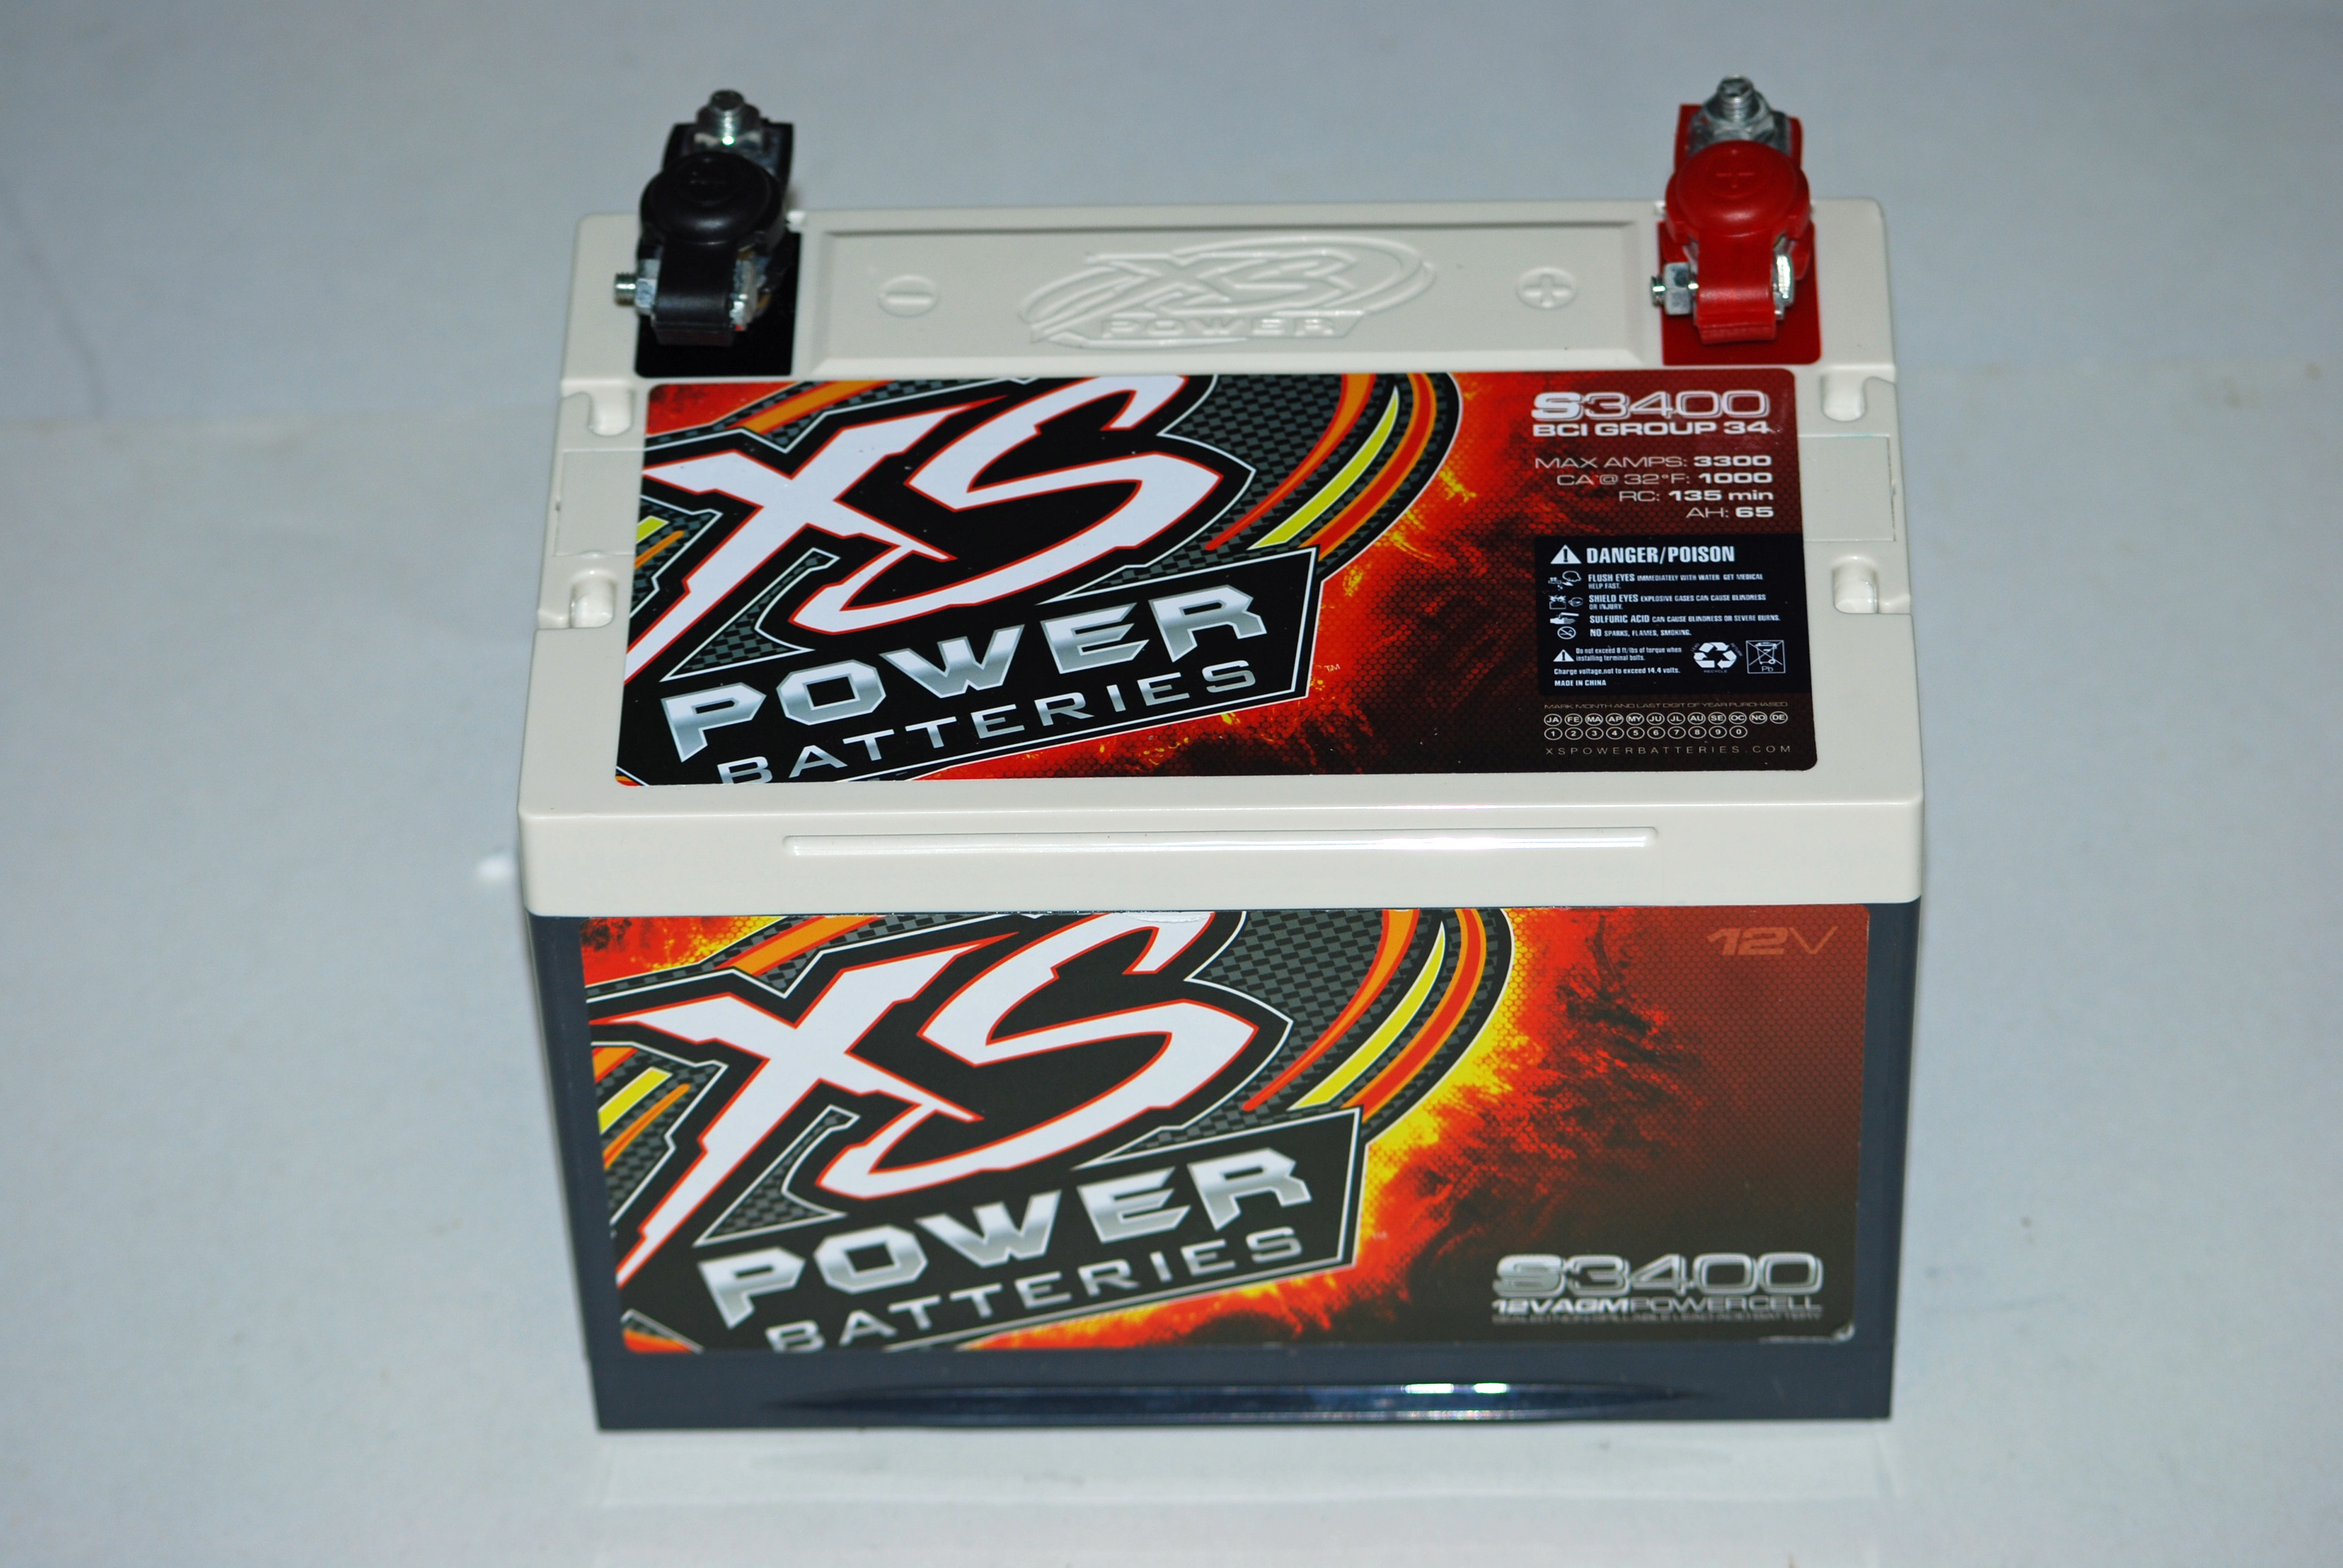 Xs Power Battery Chart